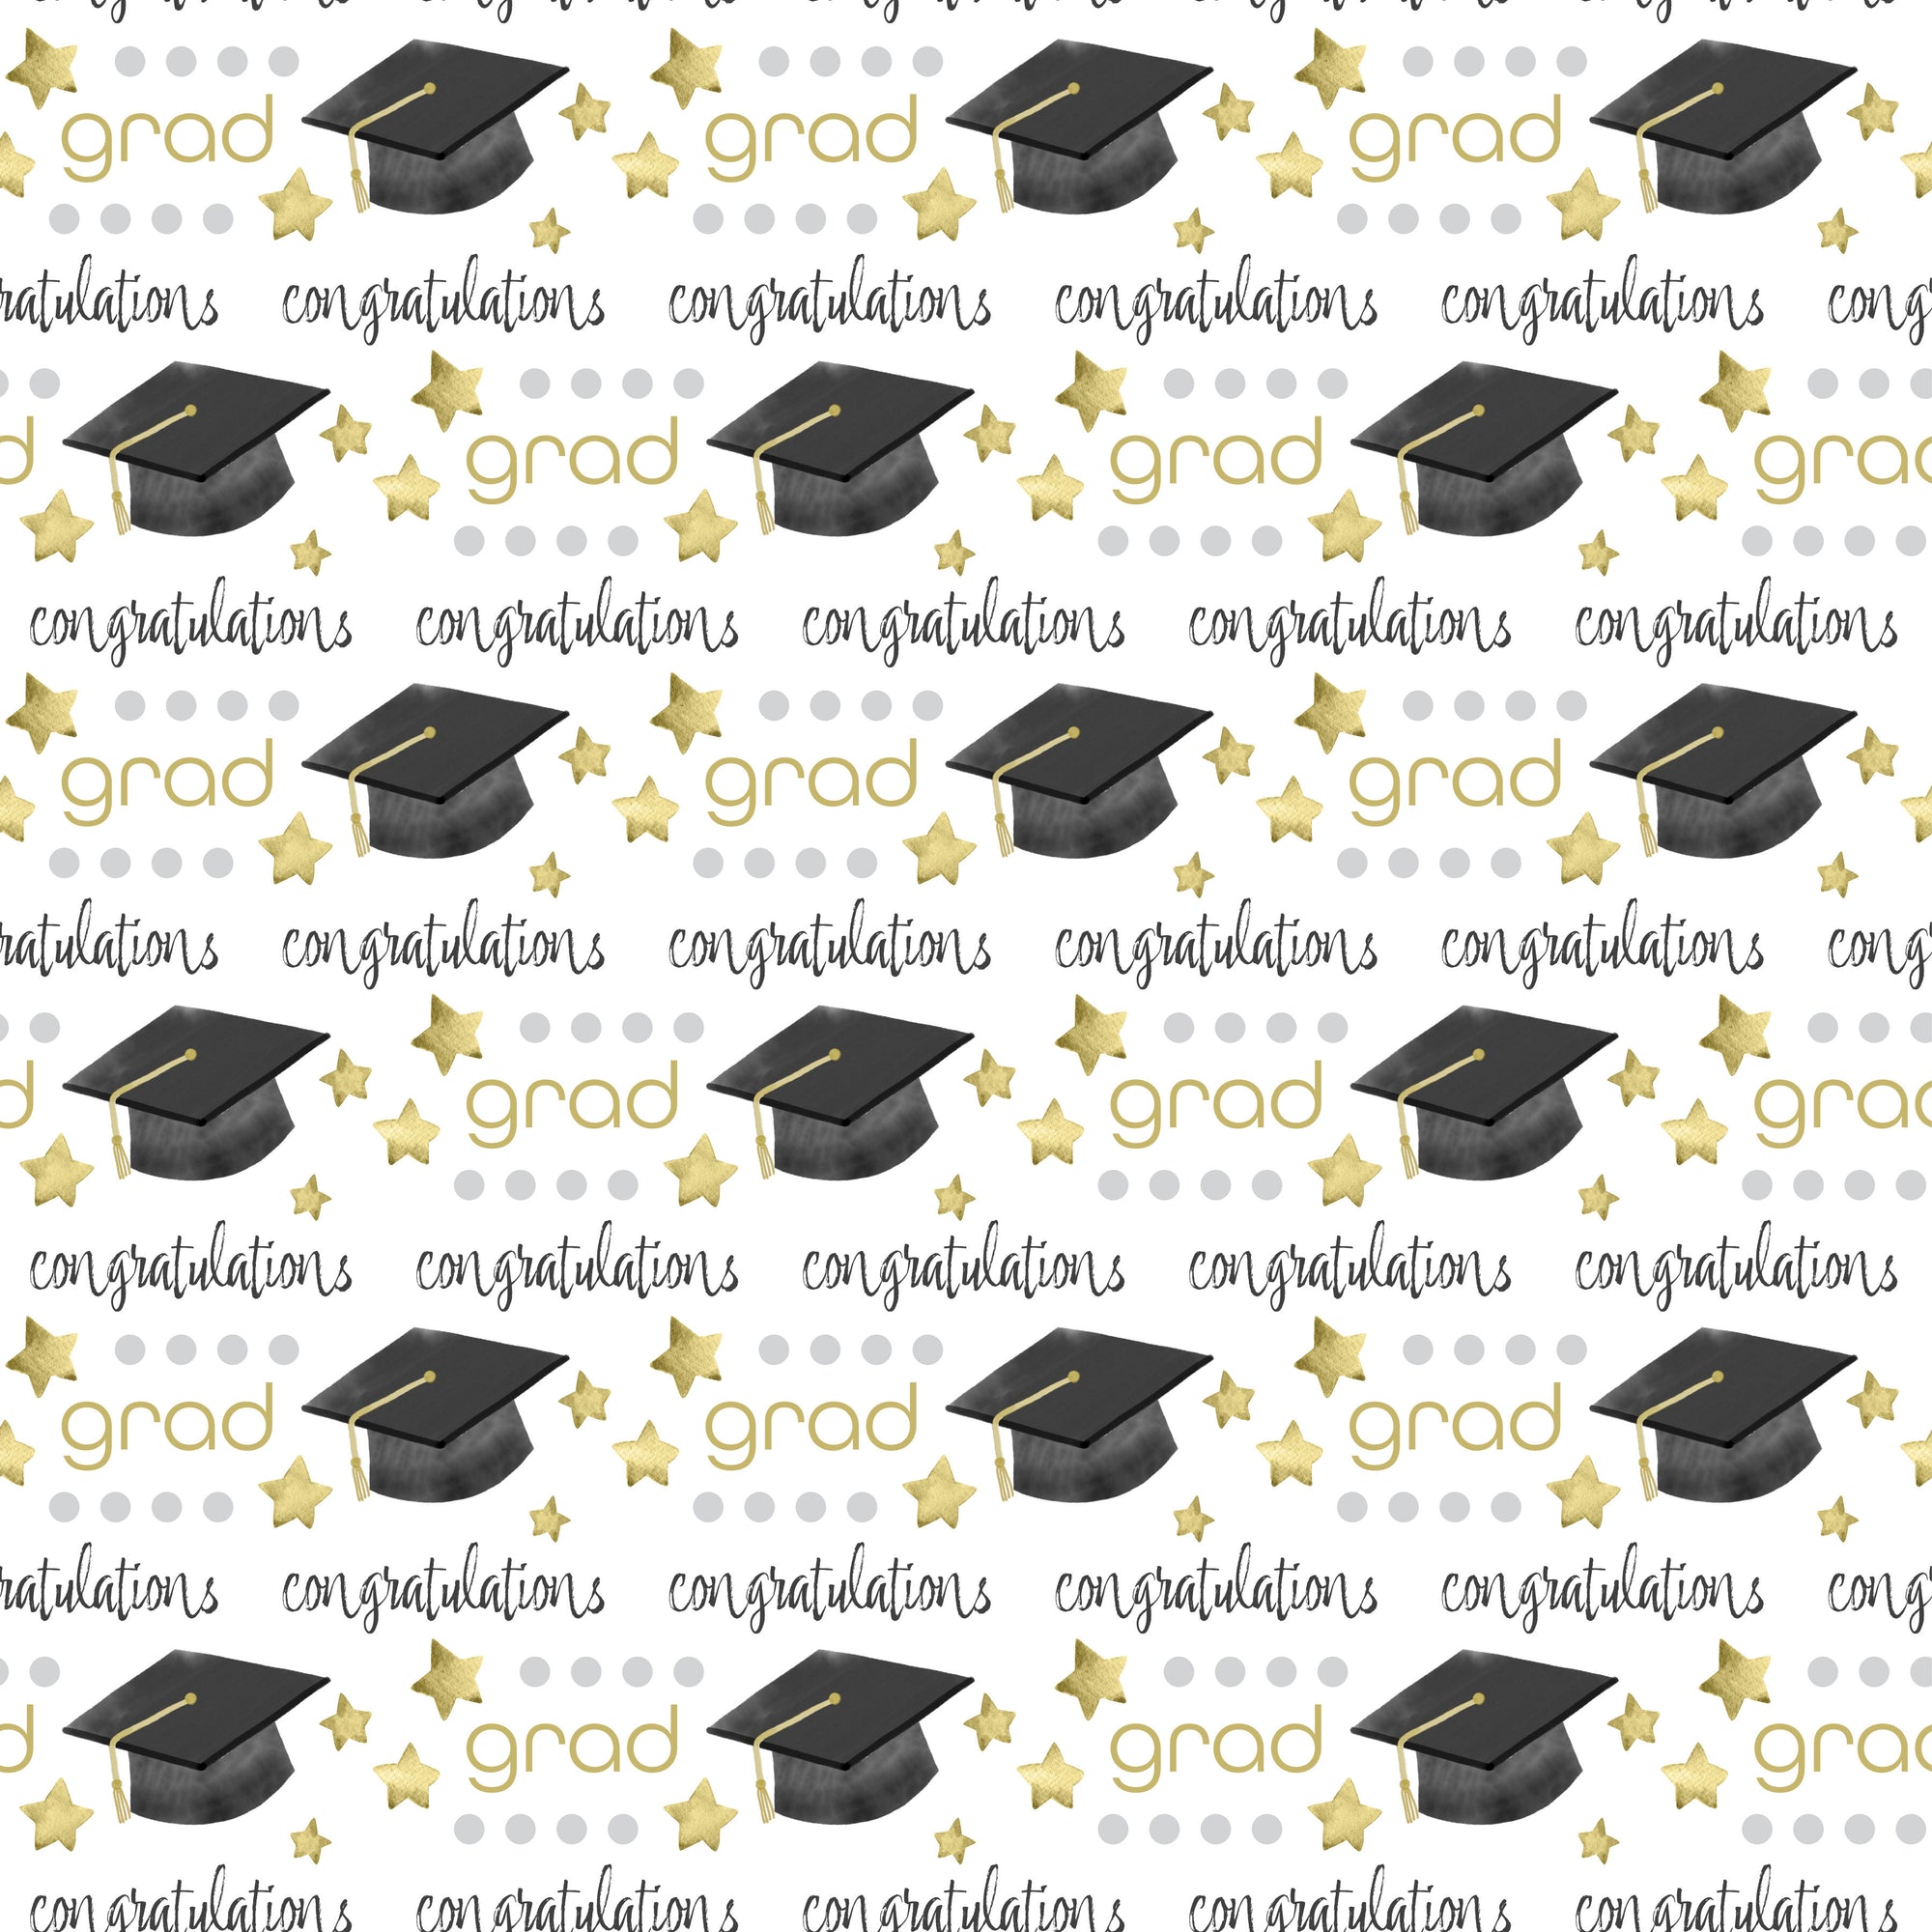 Congratulations Grad - Wrapping Paper